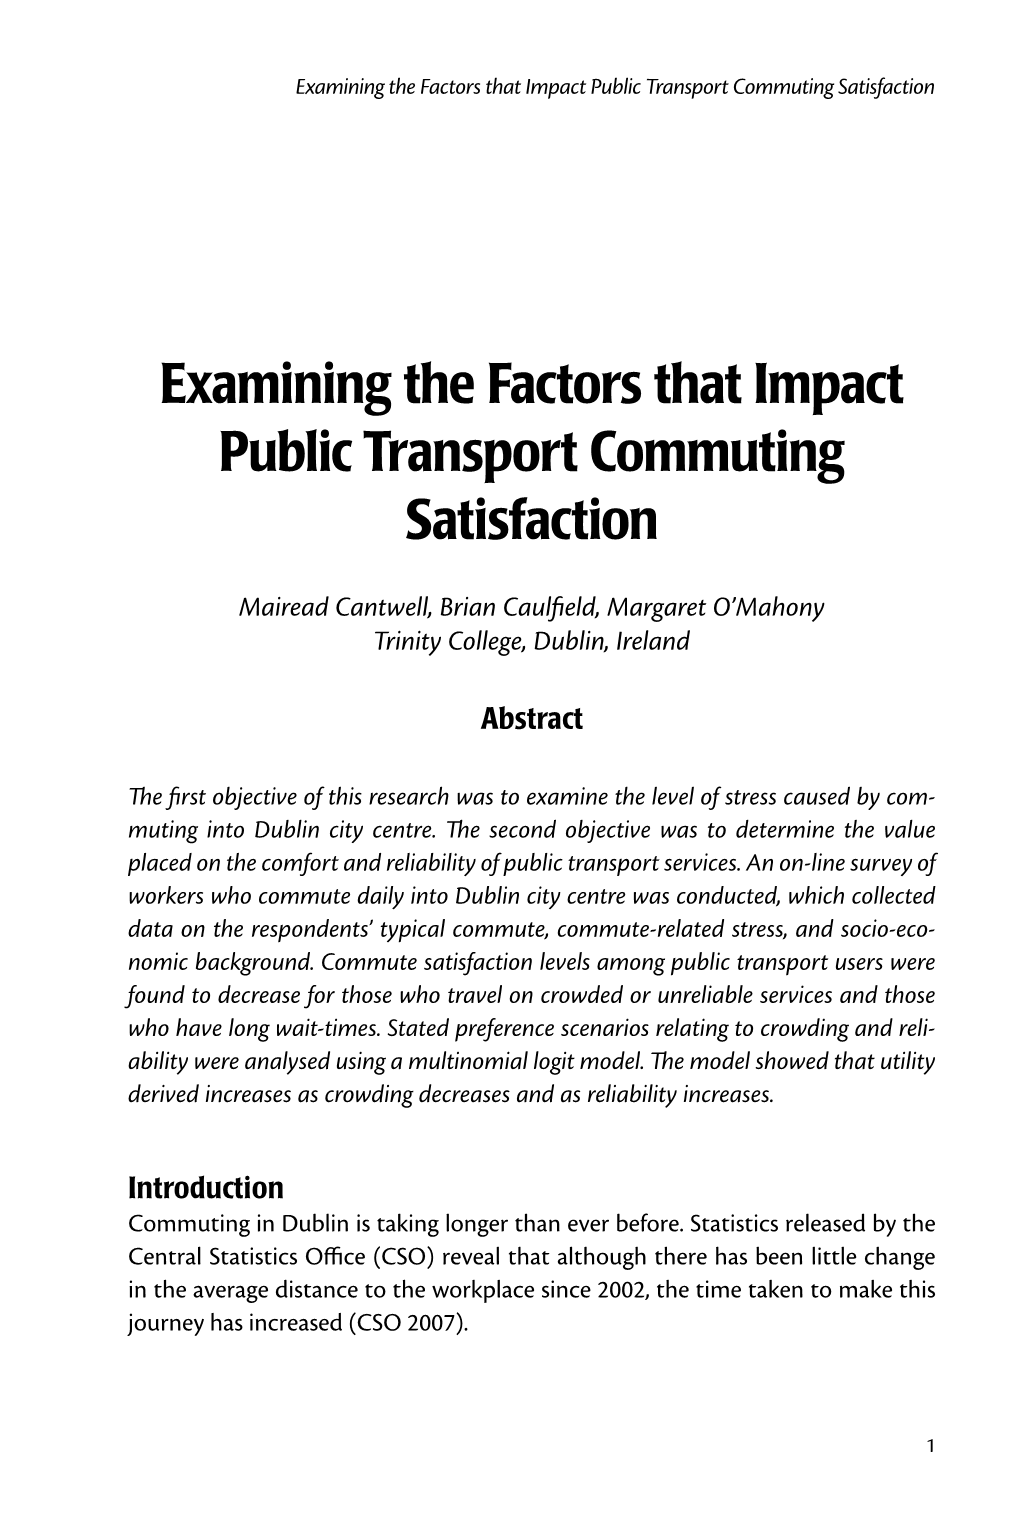 Examining the Factors That Impact Public Transport Commuting Satisfaction